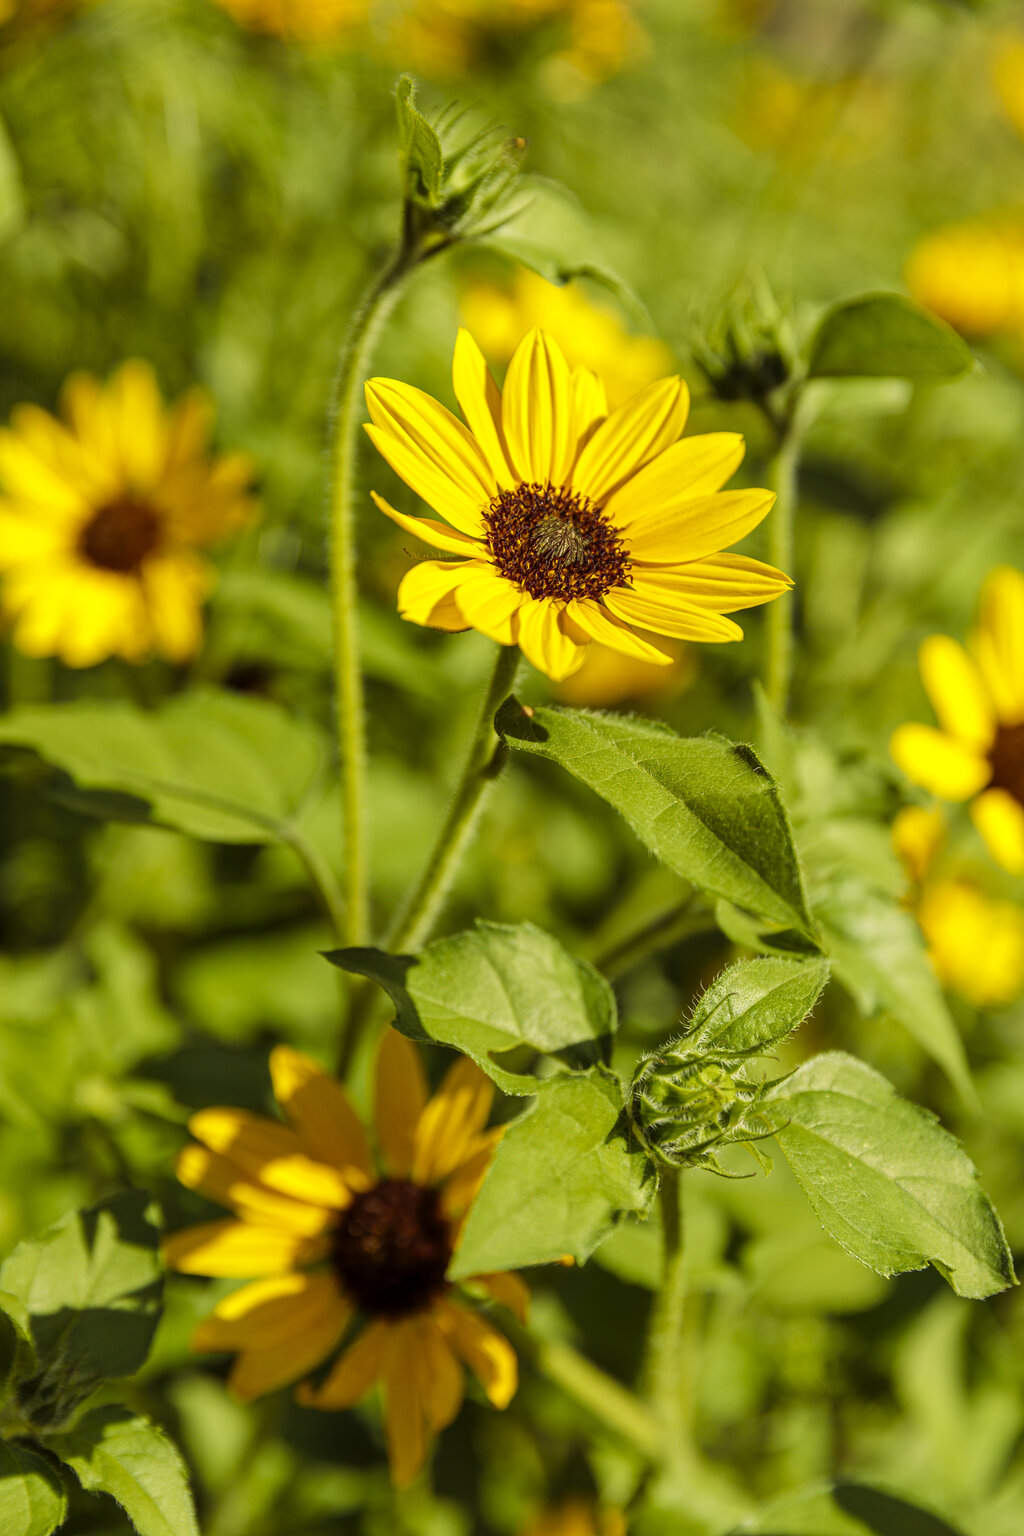 Suncredible® Yellow   Sunflower   Helianthus hybrid   Proven Winners